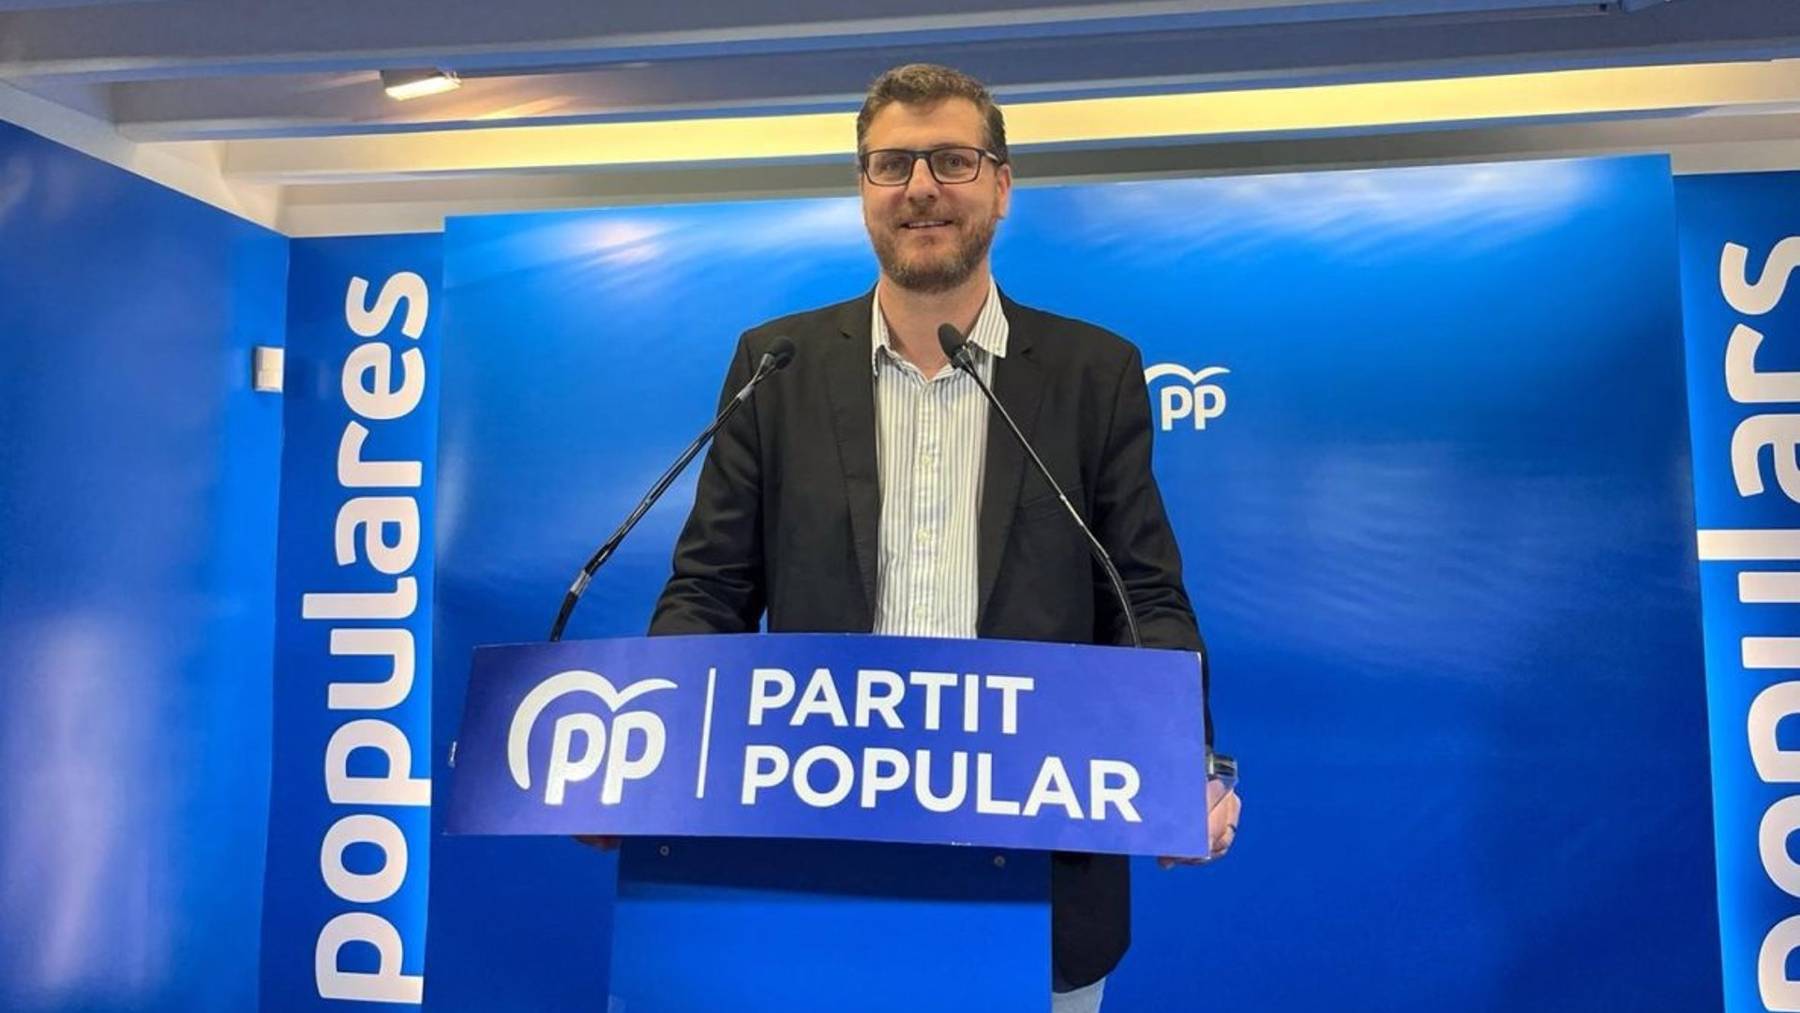 Sebastià Sagreras será el portavoz del PP en el Parlament.